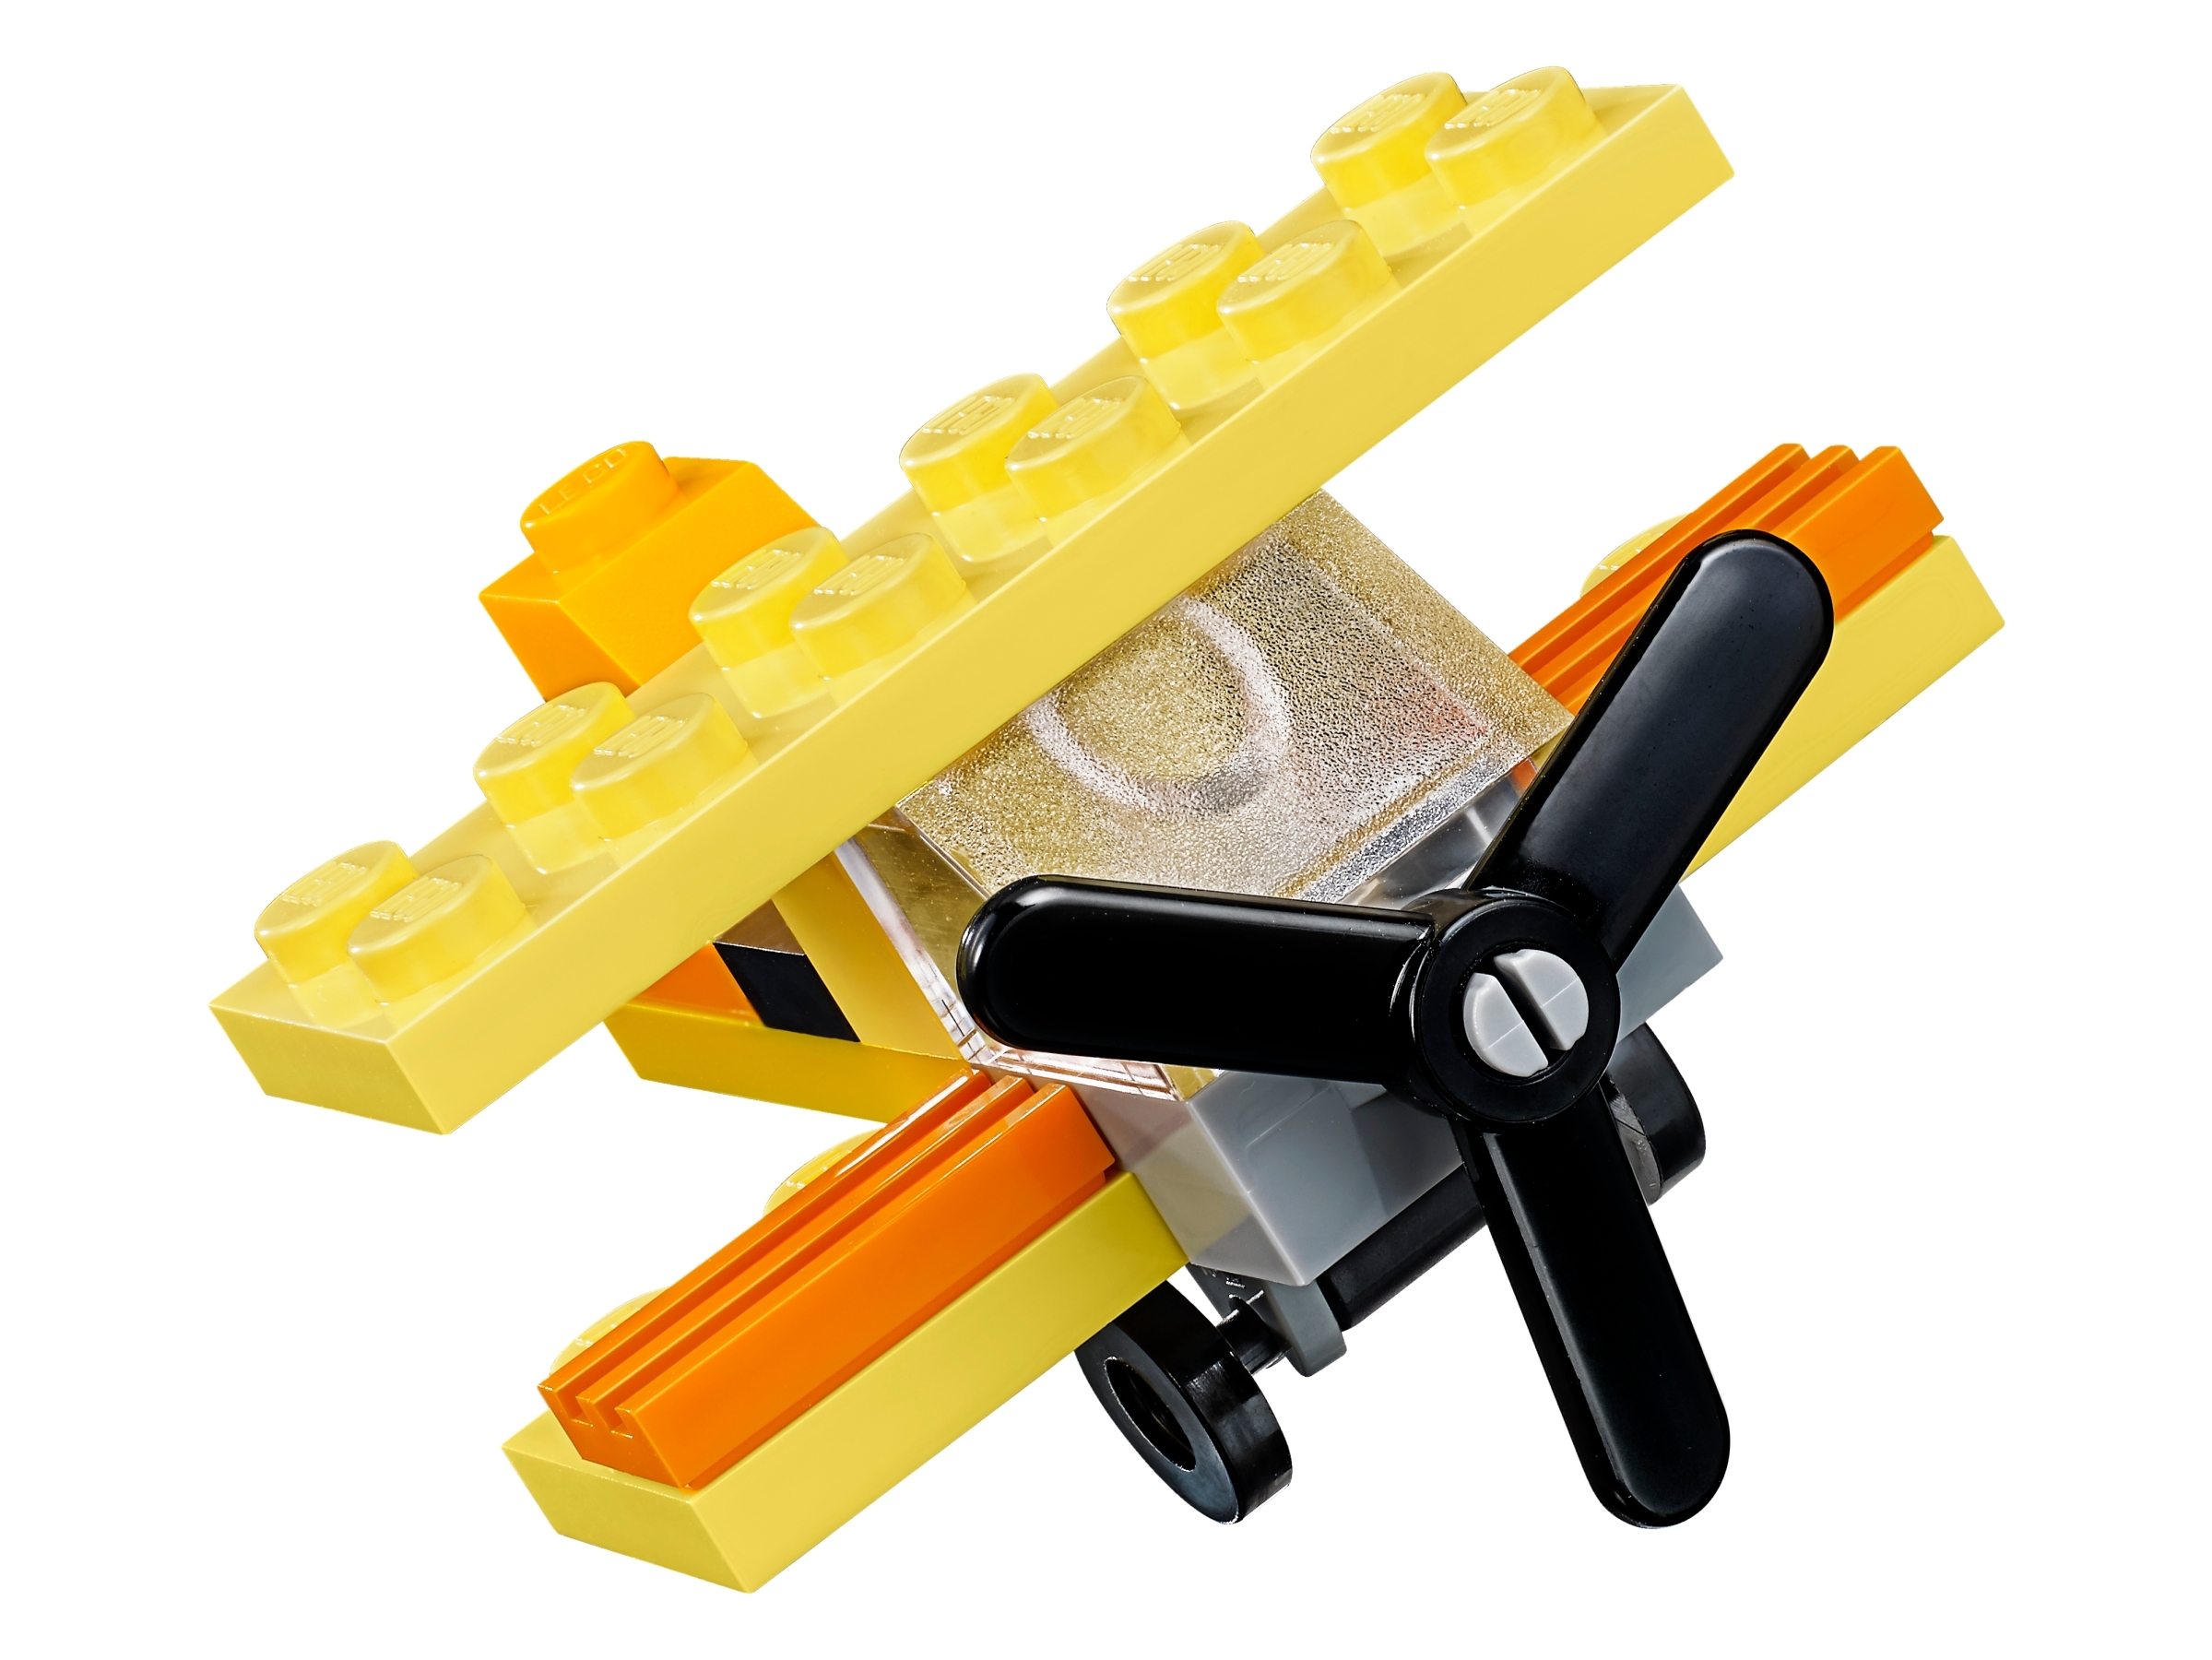 LEGO Classic Orange Creativity Box 10709 Building Kit 